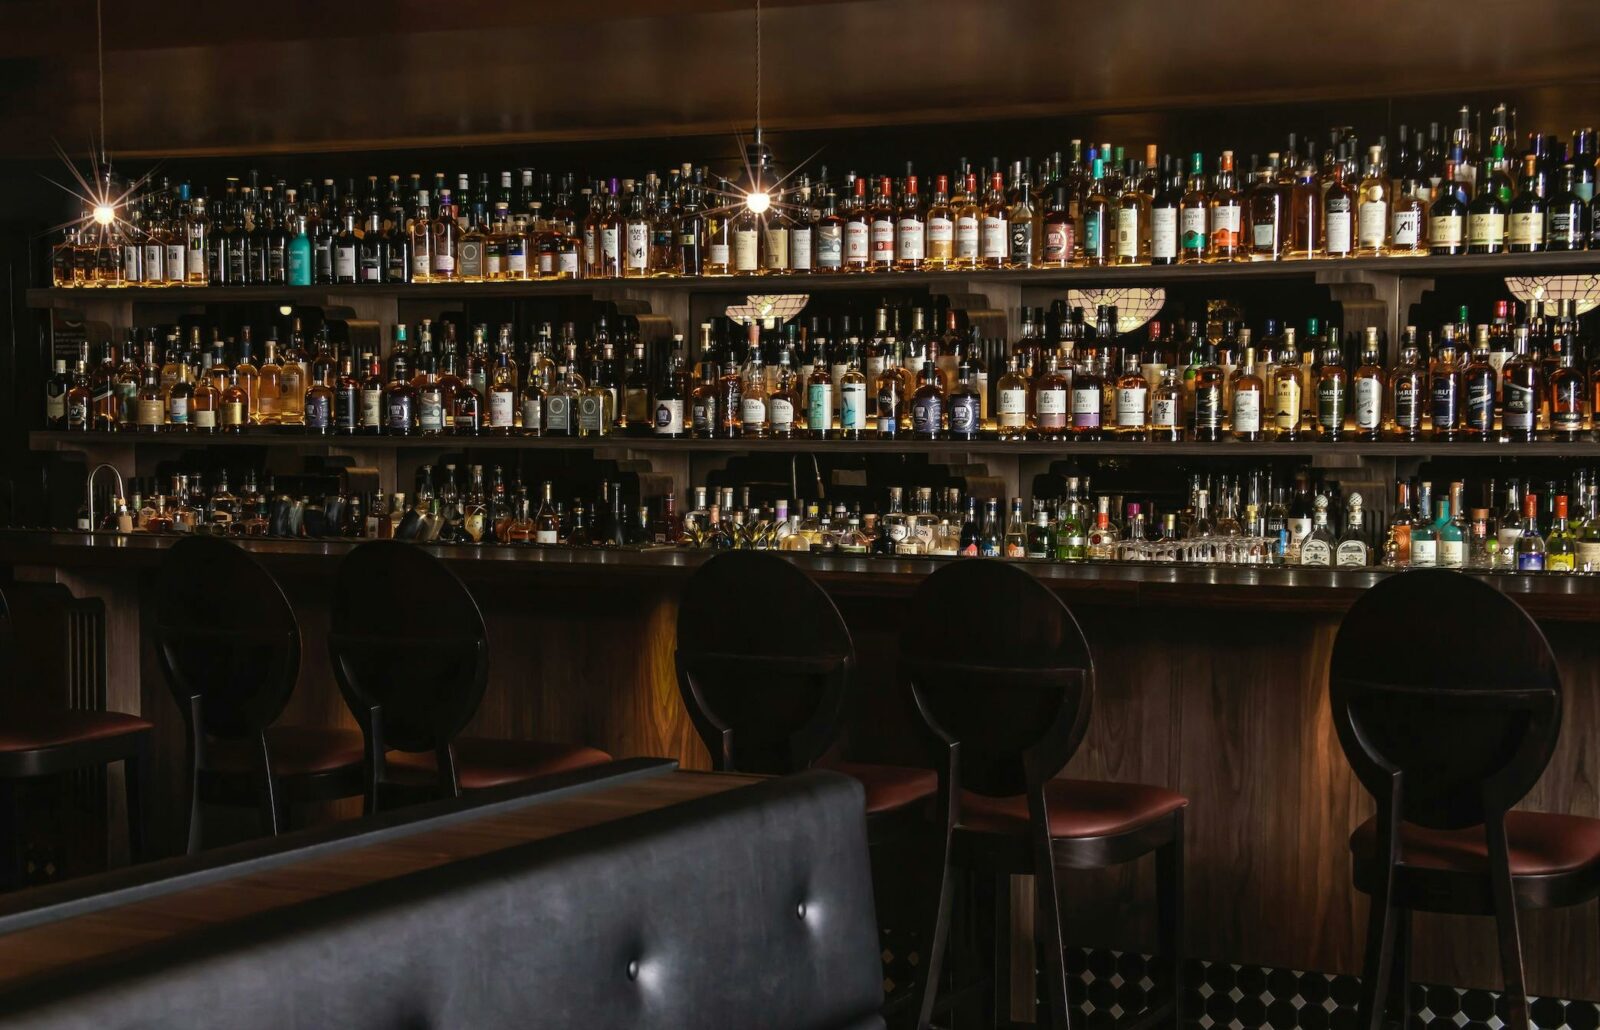 A bar filled with hundreds of whisky bottles